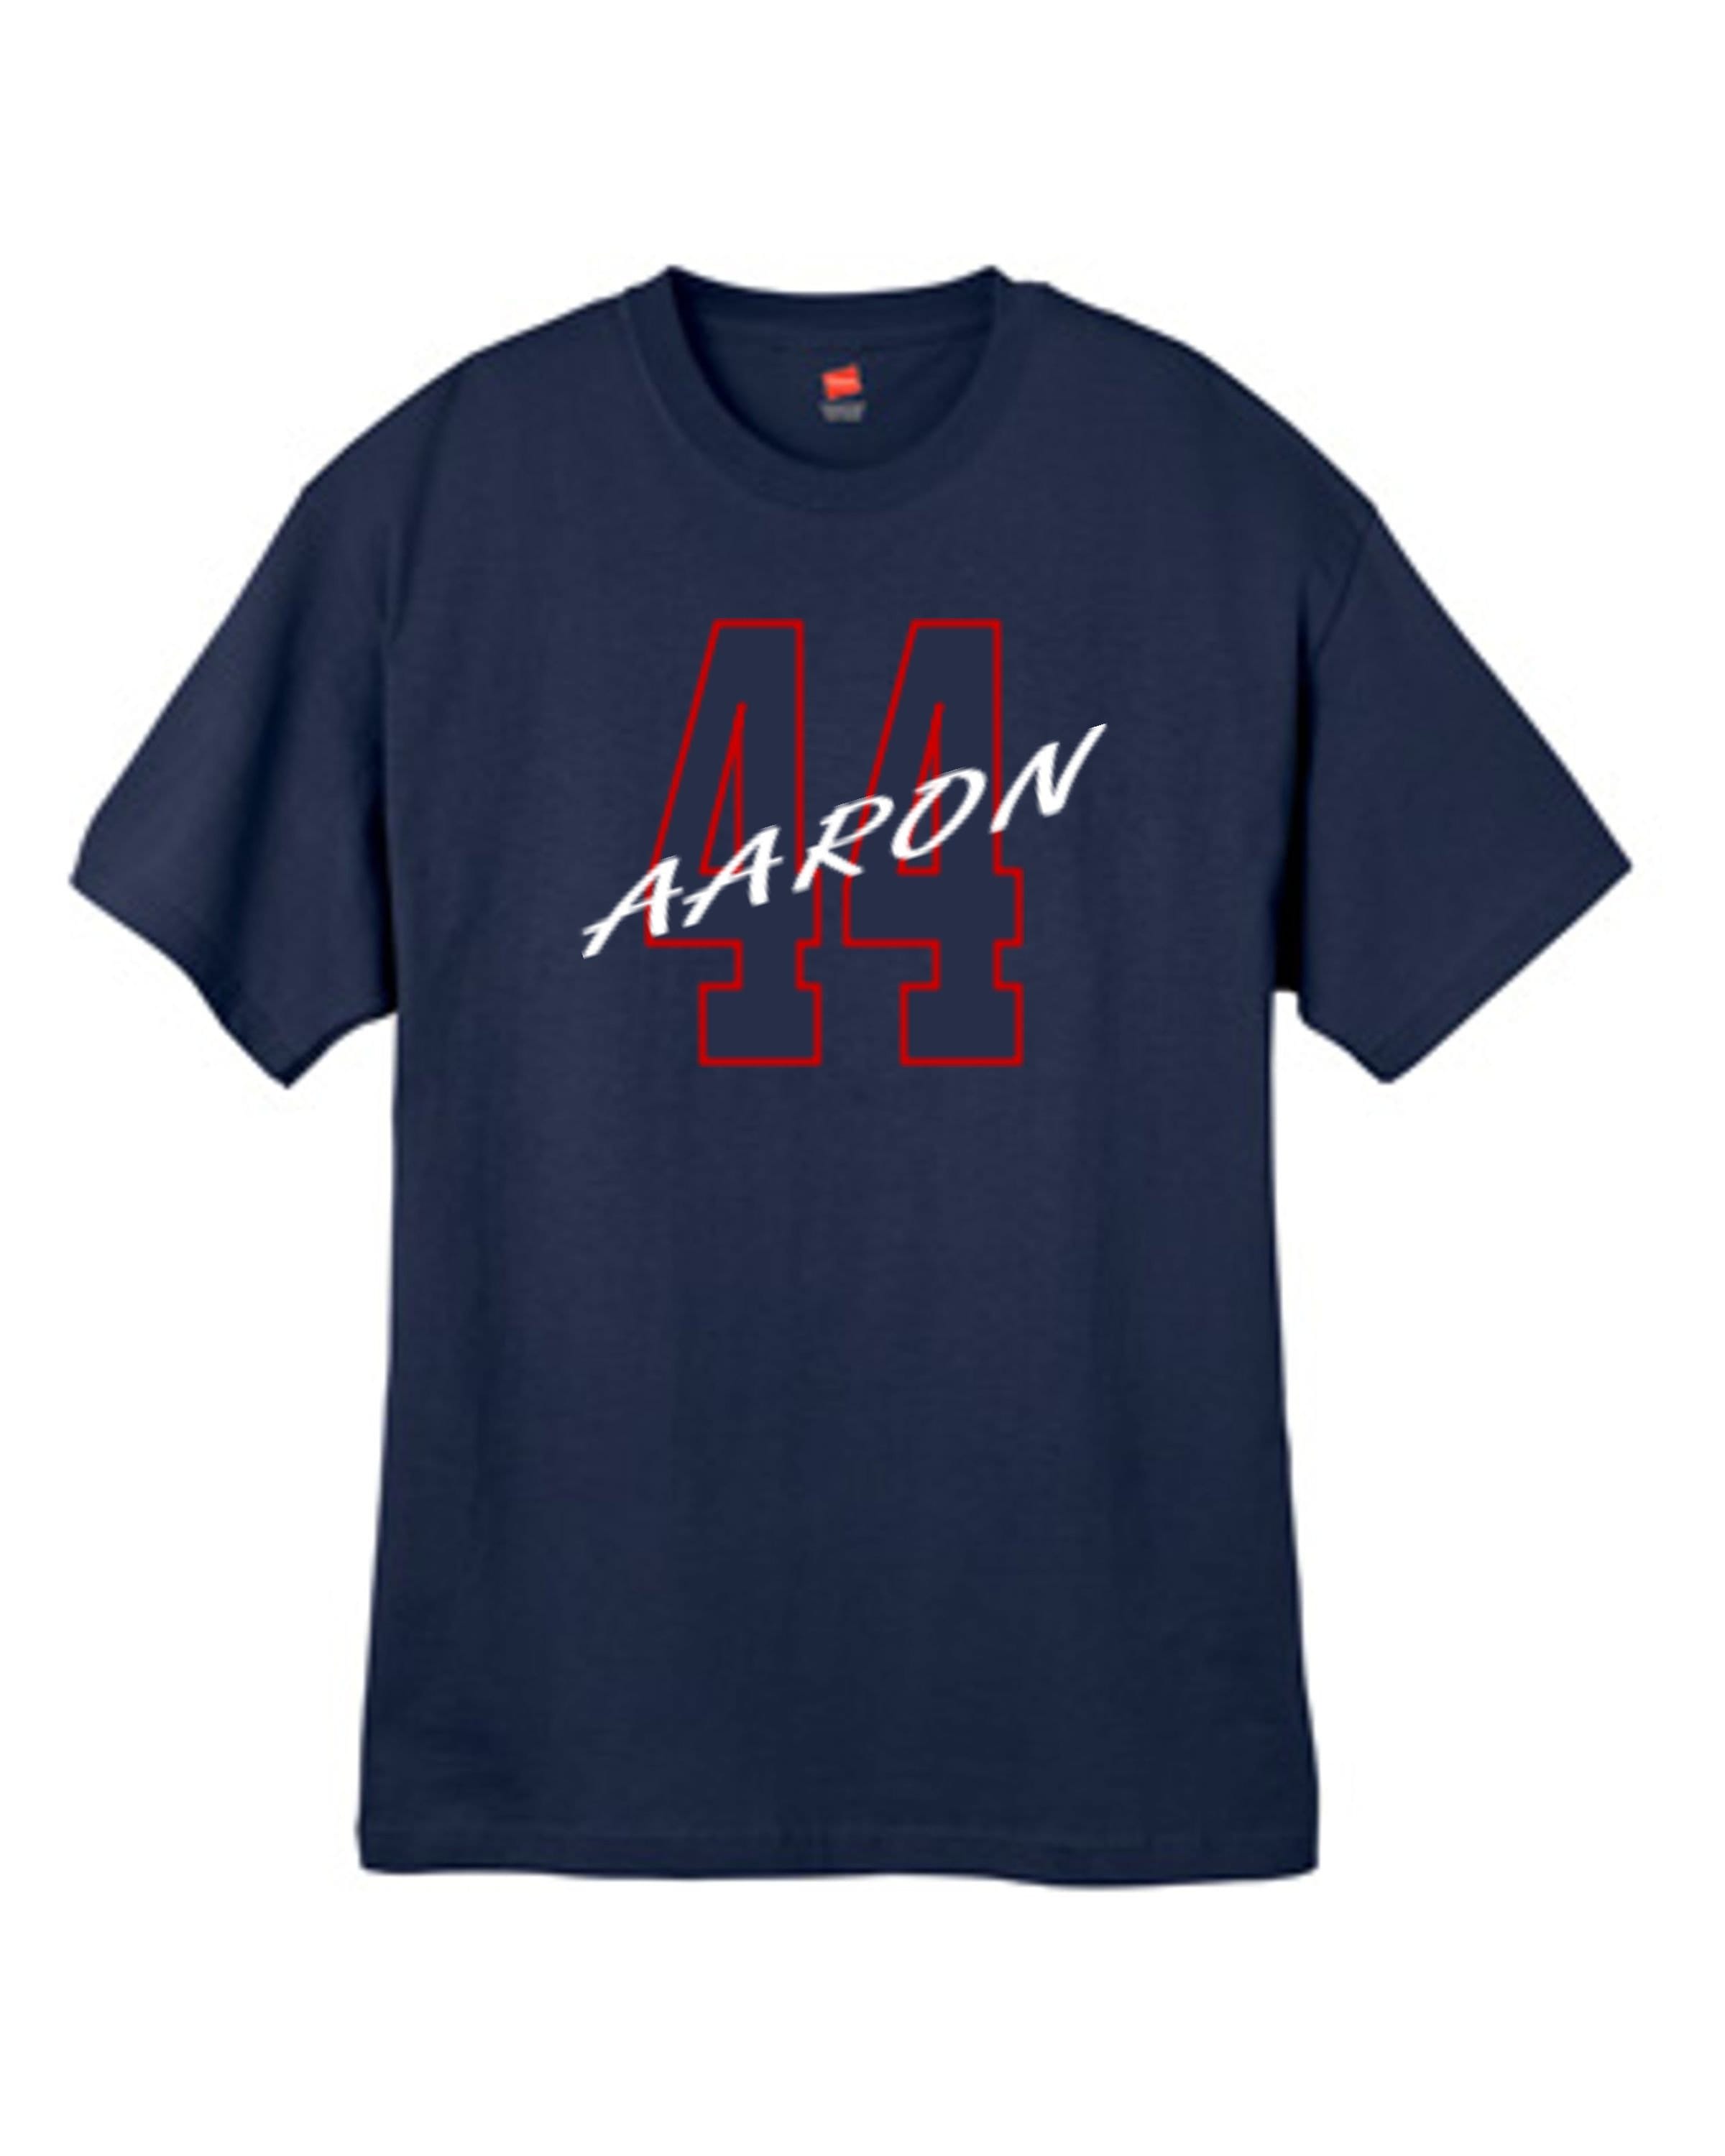 Hank Aaron Name & Number T-Shirt - Navy - Tshirtsedge